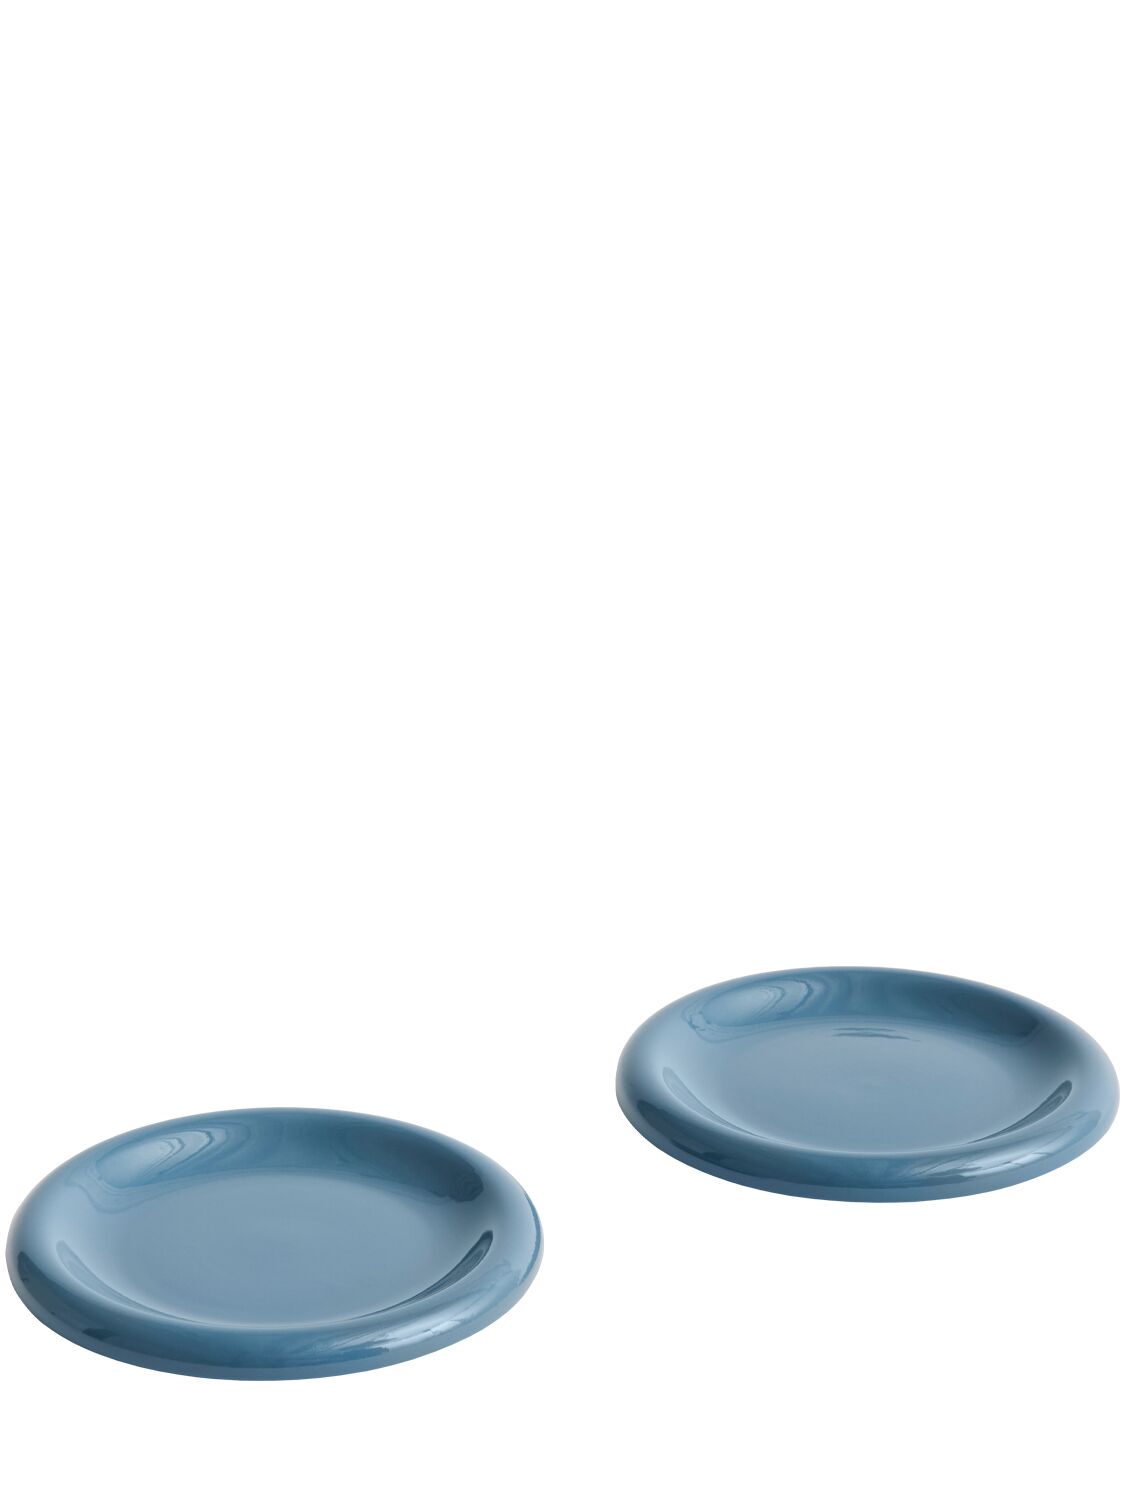 Image of Set Of 2 Barro Plates